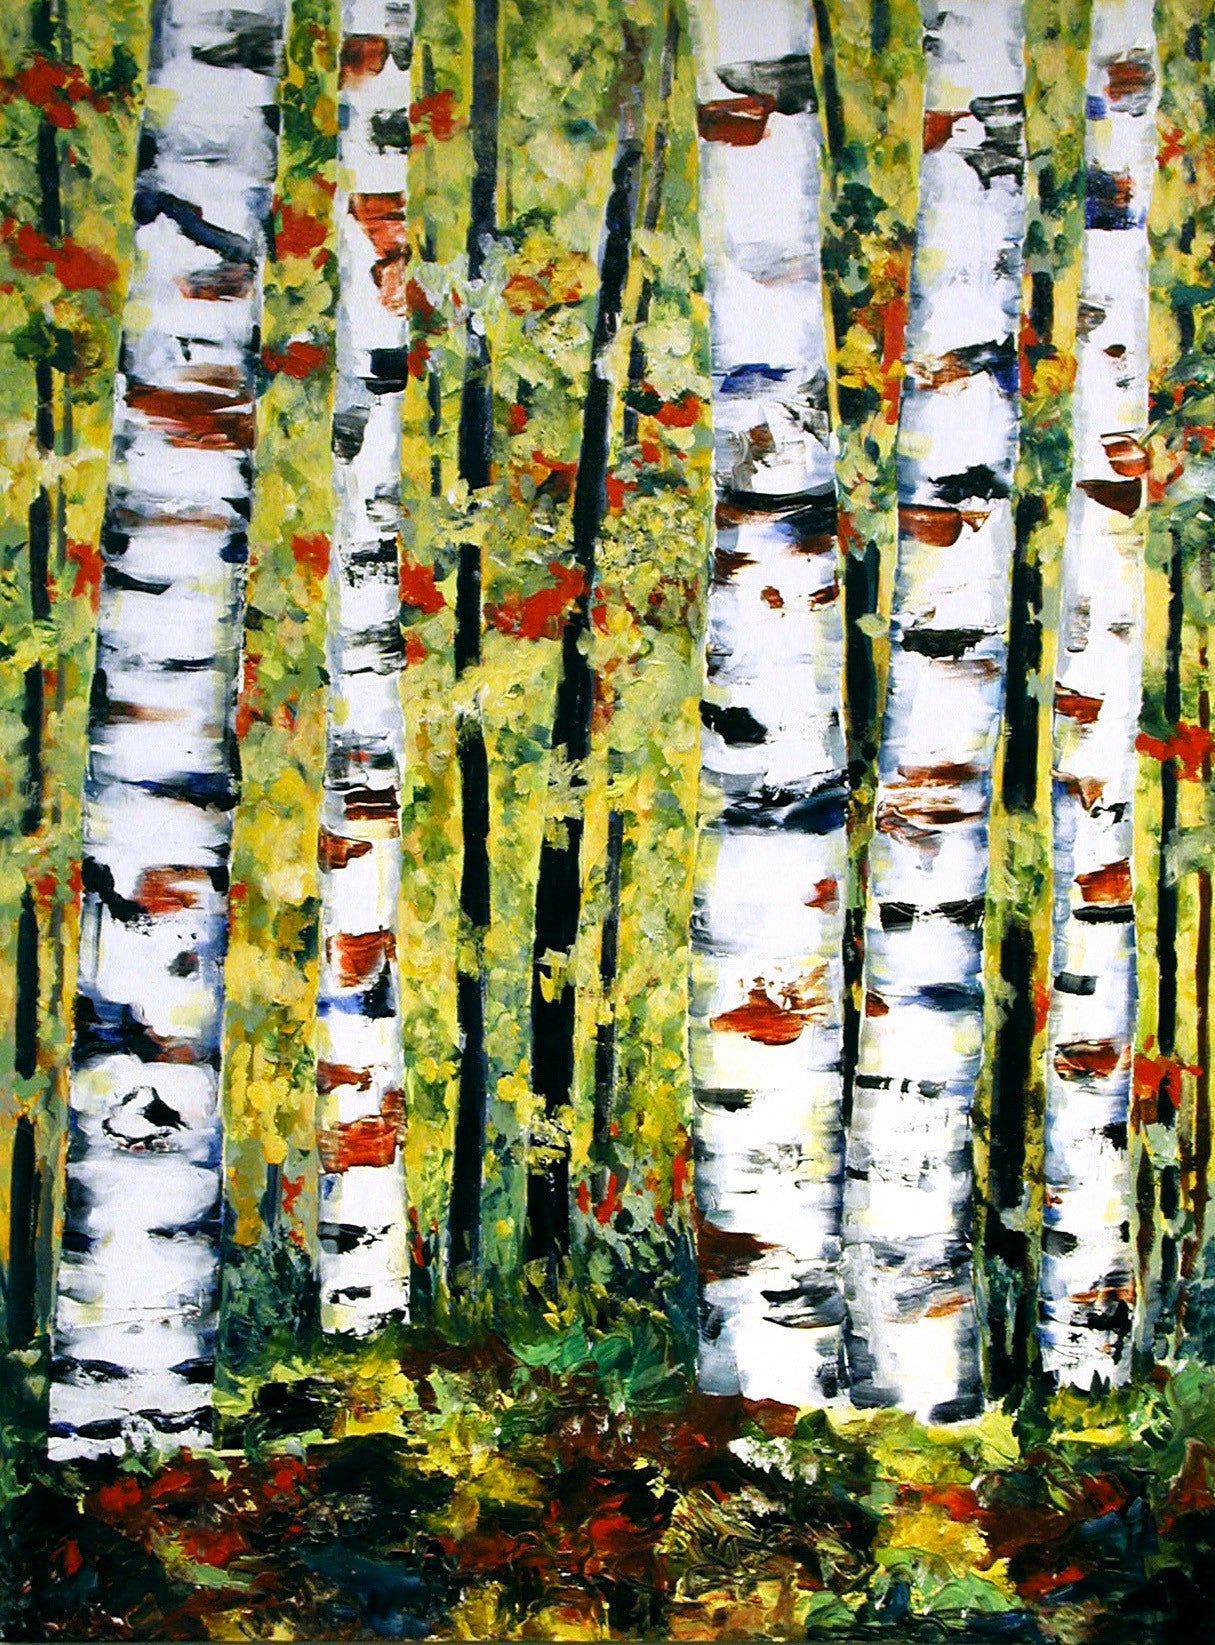 Aspen Trees Painting by Jill Saur